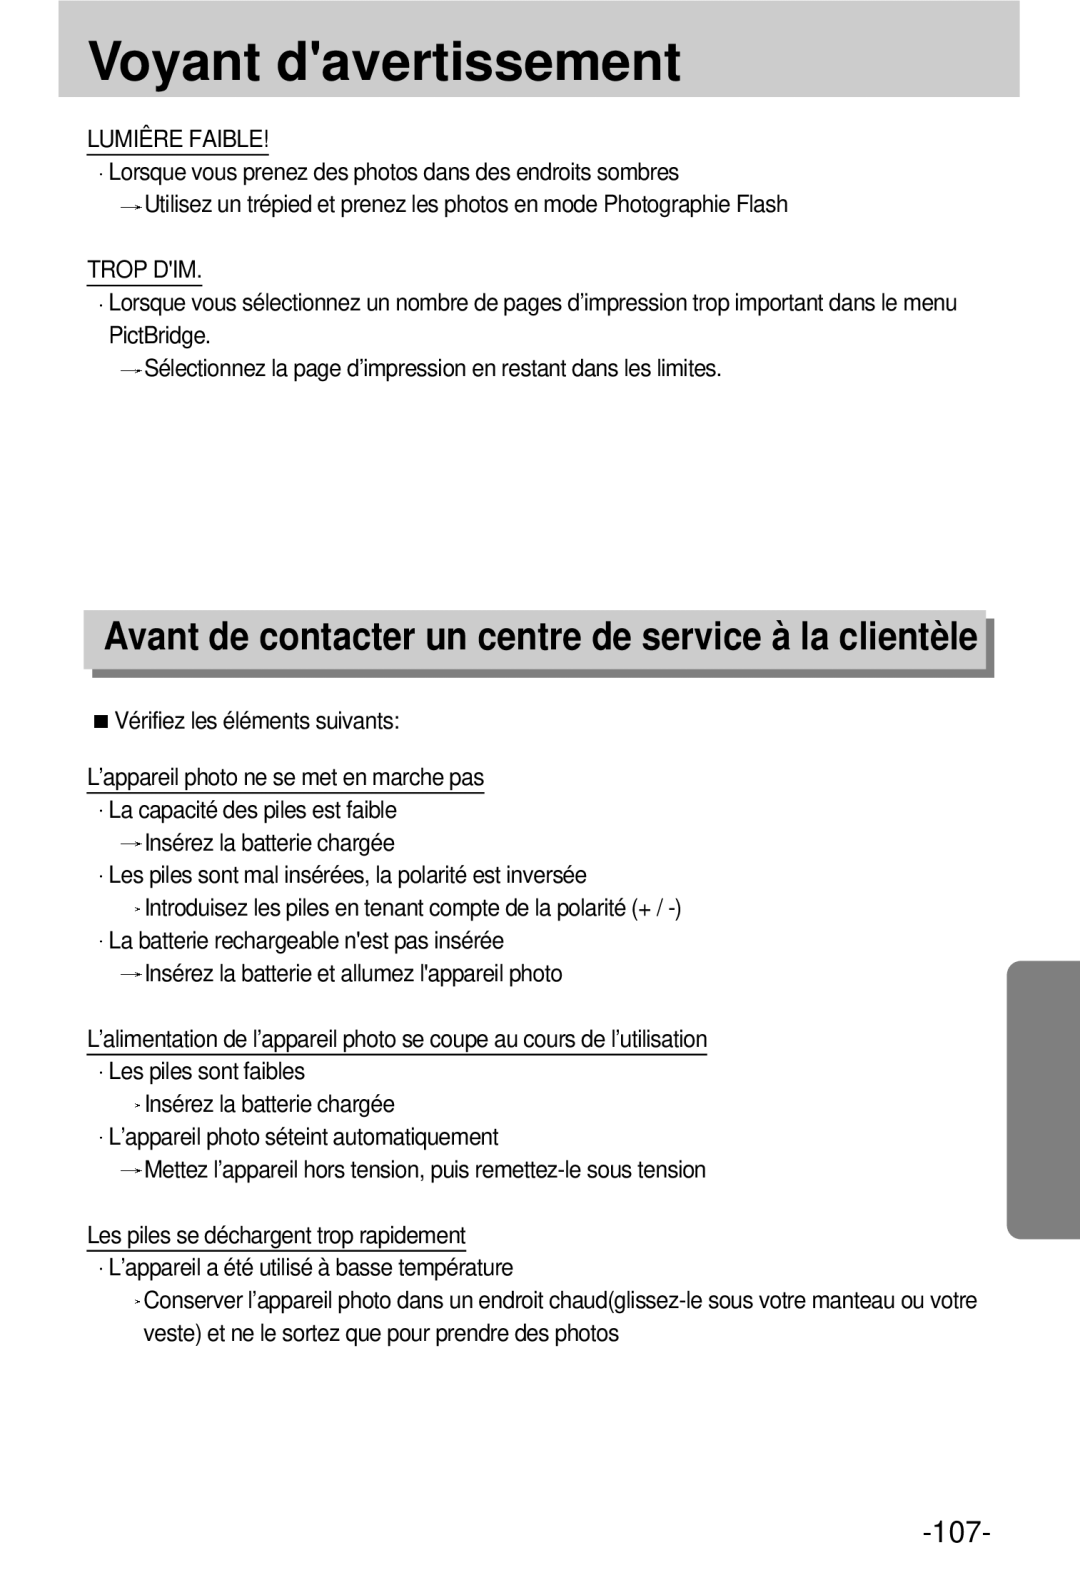 Samsung EC-V800ZSBA/FR manual Avant de contacter un centre de service à la clientèle, Lumiêre Faible, Trop DIM 